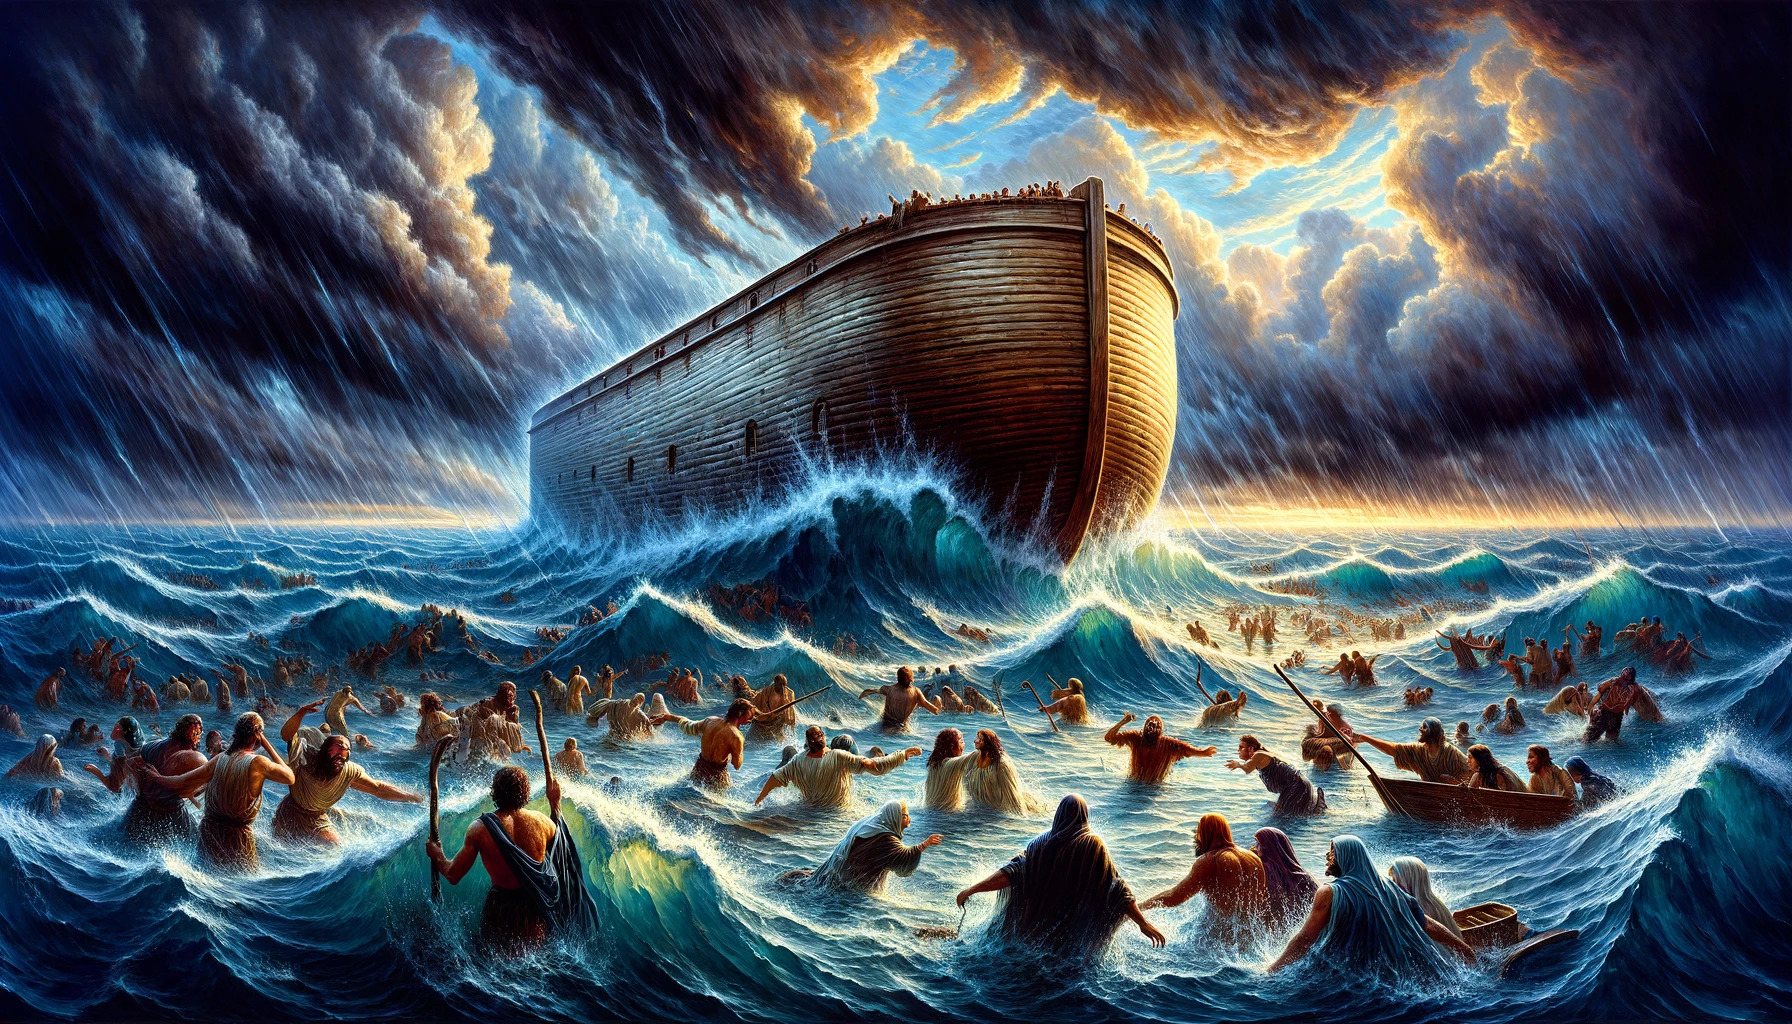 Did Noah’s Ark Actually Happen?